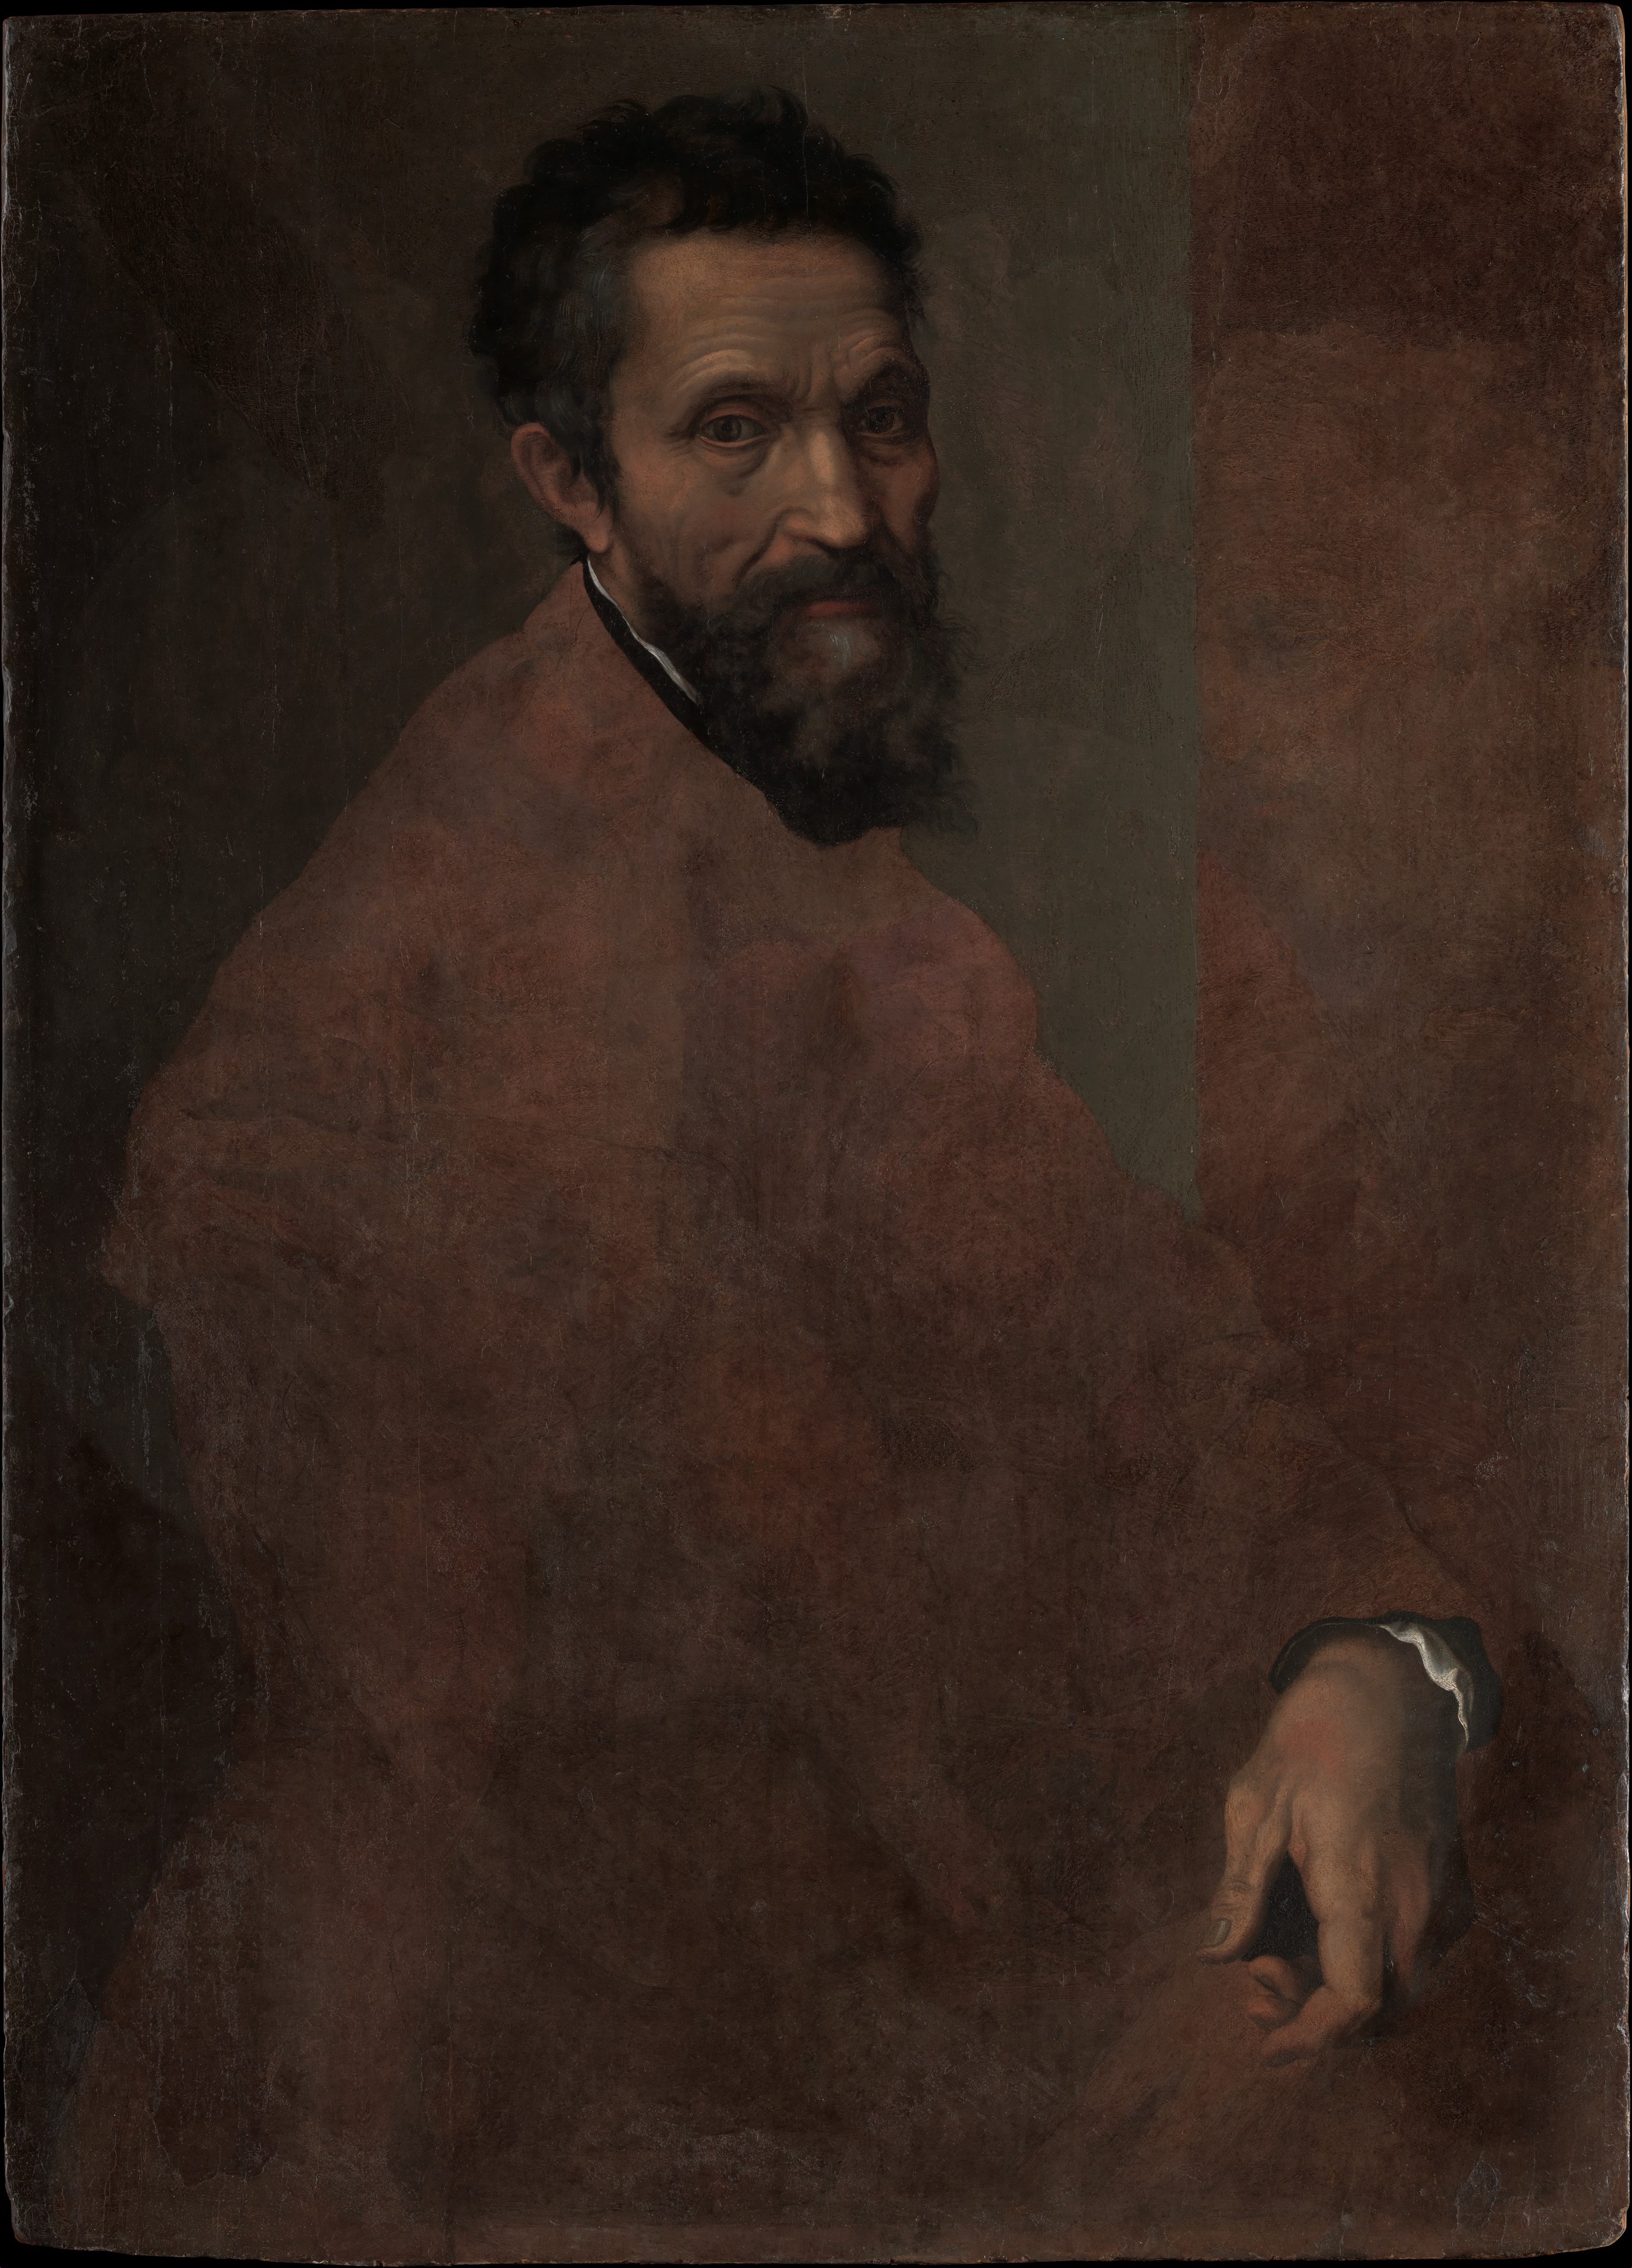 Michelangelo - March 6, 1475 - February 18, 1564